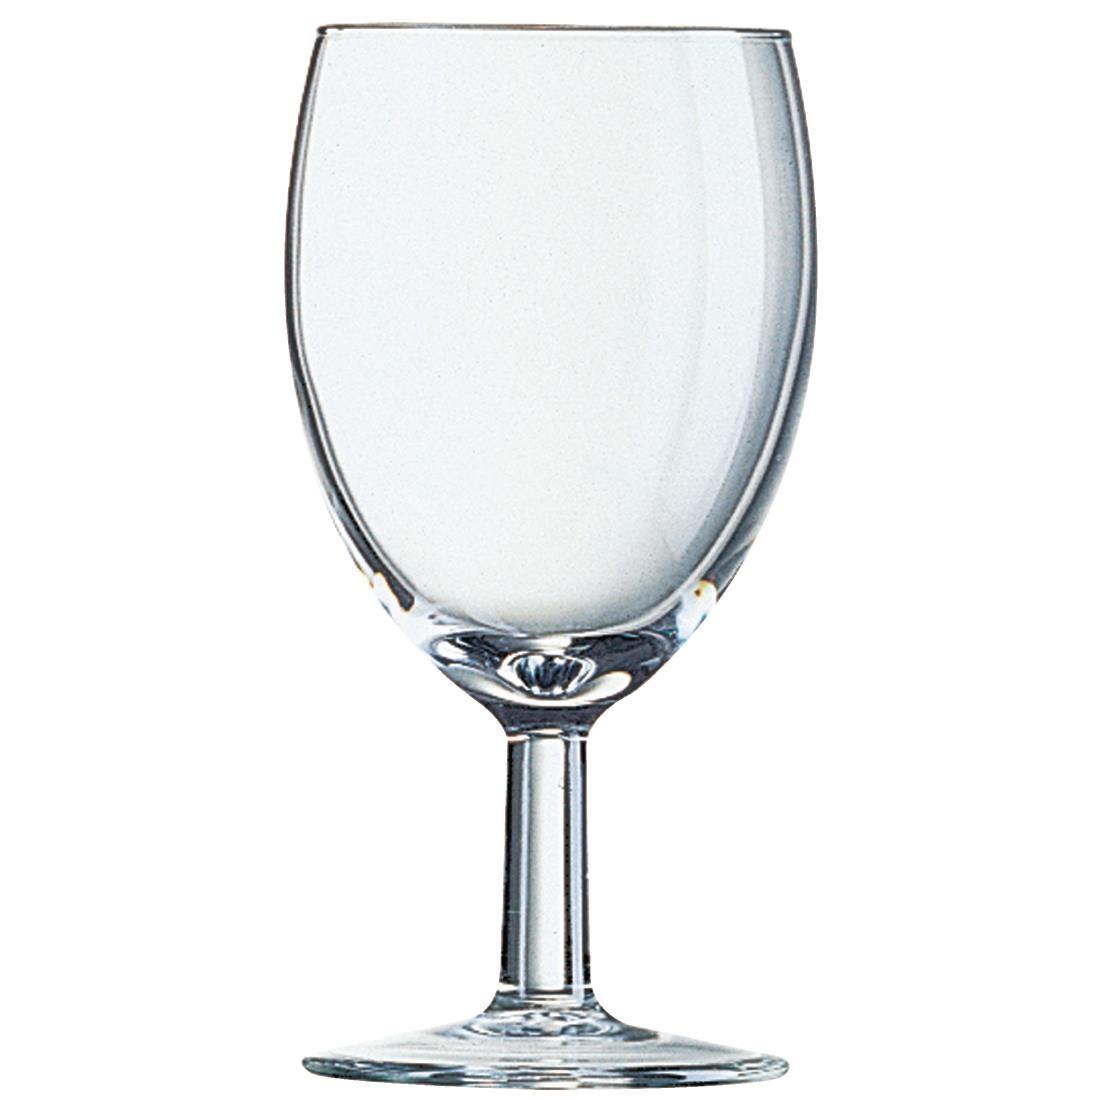 Arcoroc Savoie Wine Glasses 240ml (Pack of 48) - CJ501  - 1